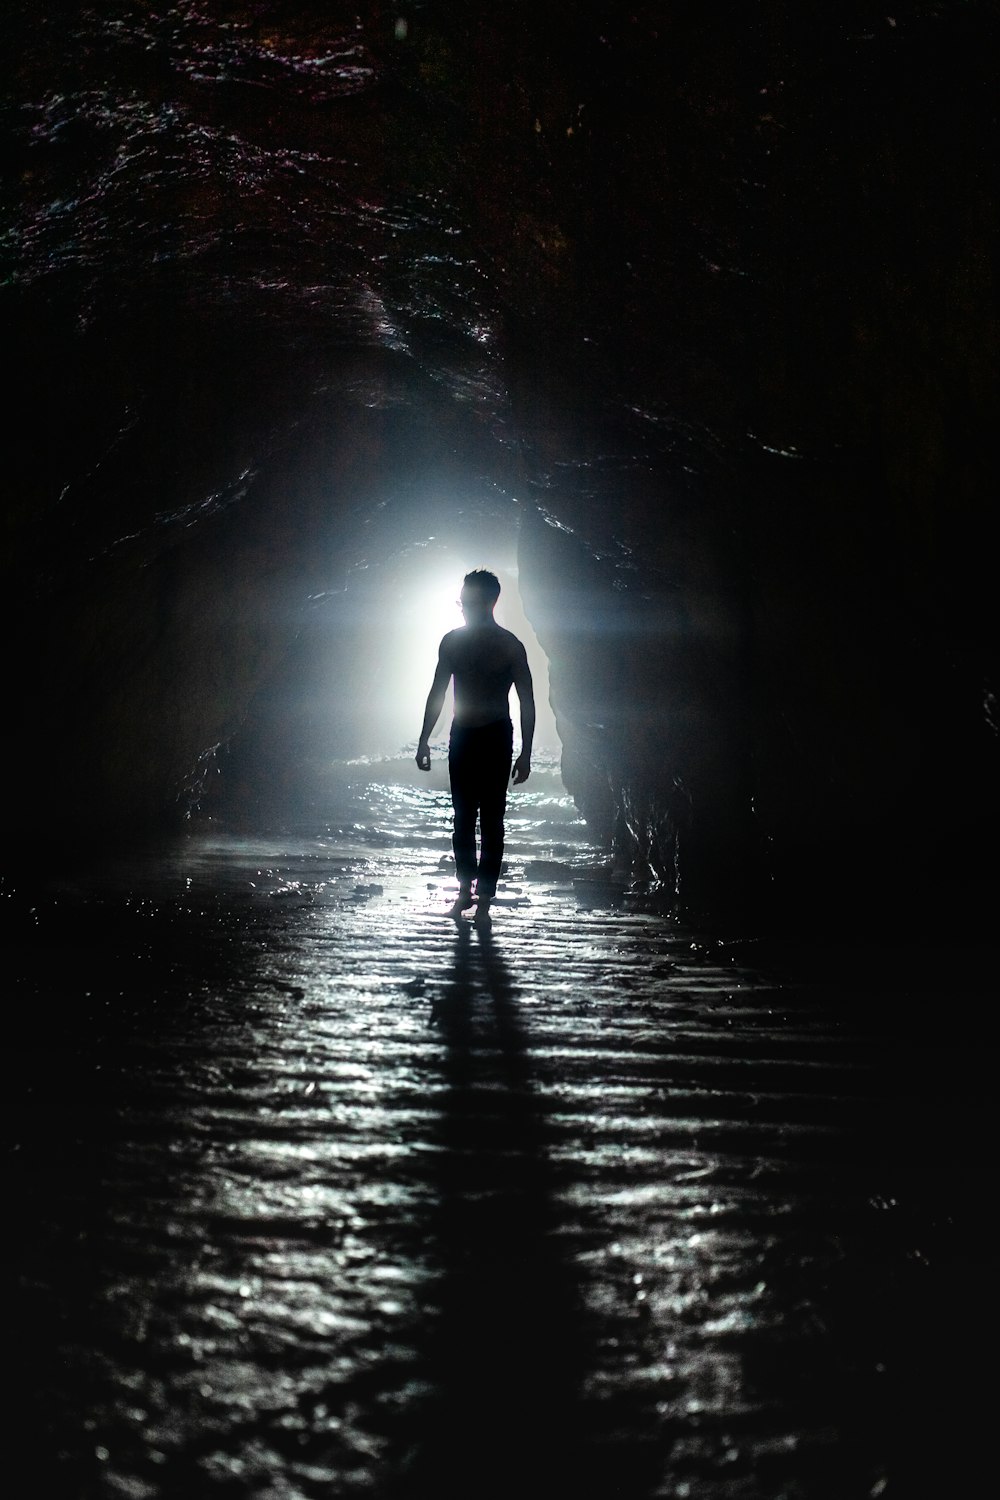 a man is walking through a dark tunnel